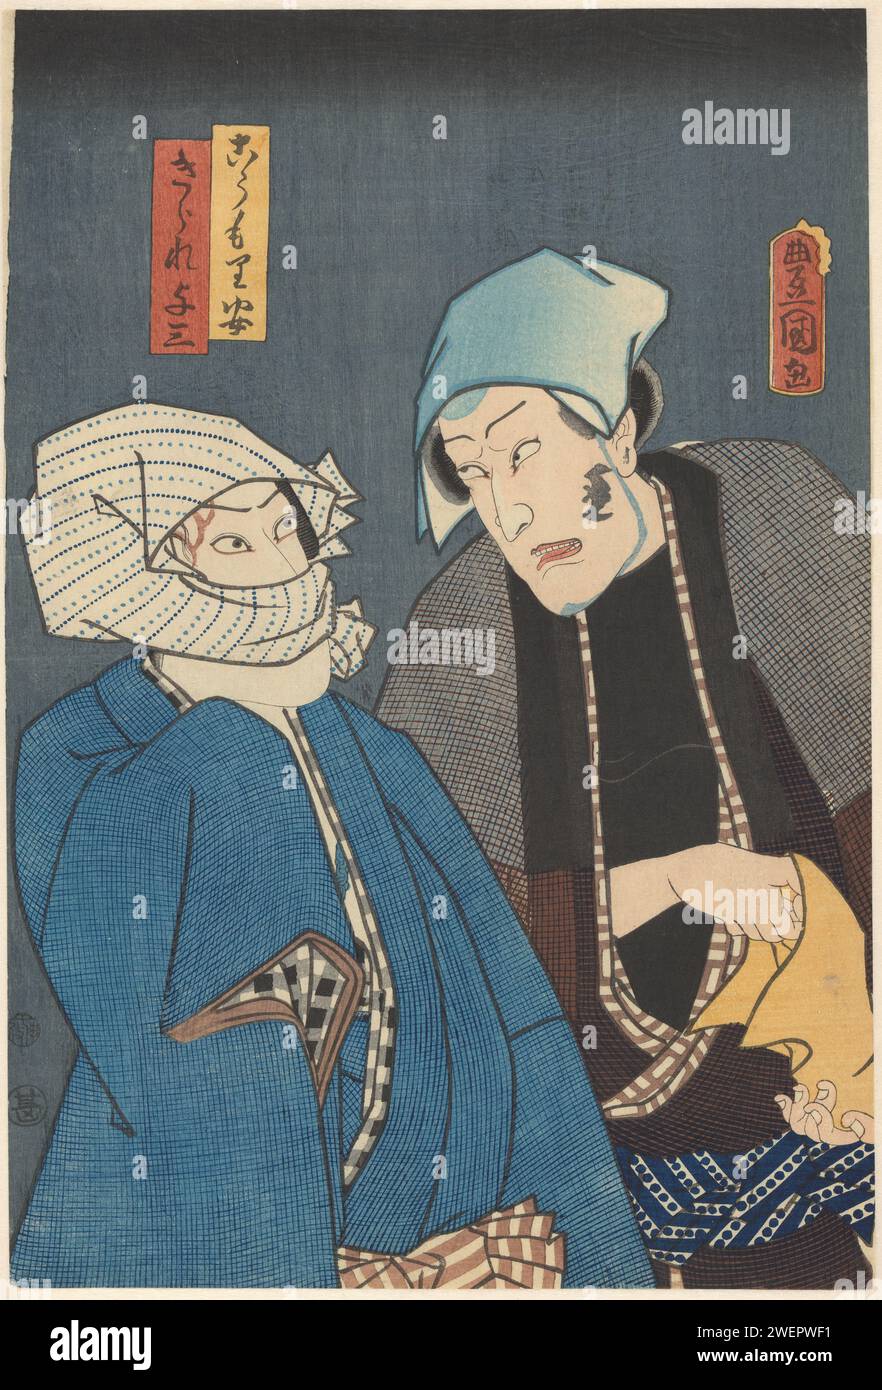 Kômori Yasugorô et Kirare Yosaburô conspirant, Utagawa Kunisada (I), 186-1860 estampes Kômori Yasugorô avec tatouage biston distinctif sur sa joue une conspiration forgeant avec Kirare Yosaburô. Les deux portent un foulard. Kômori Yasugorô est joué par l'acteur kabuki Ichikawa Kodanji IV et Kirare Yosaburô par Kawarasaki Gonjurô I. Groupe d'acteurs gravés sur bois couleur papier, troupe ; acteurs sur scène. Head-Gear (avec NOM). tatouage Banque D'Images